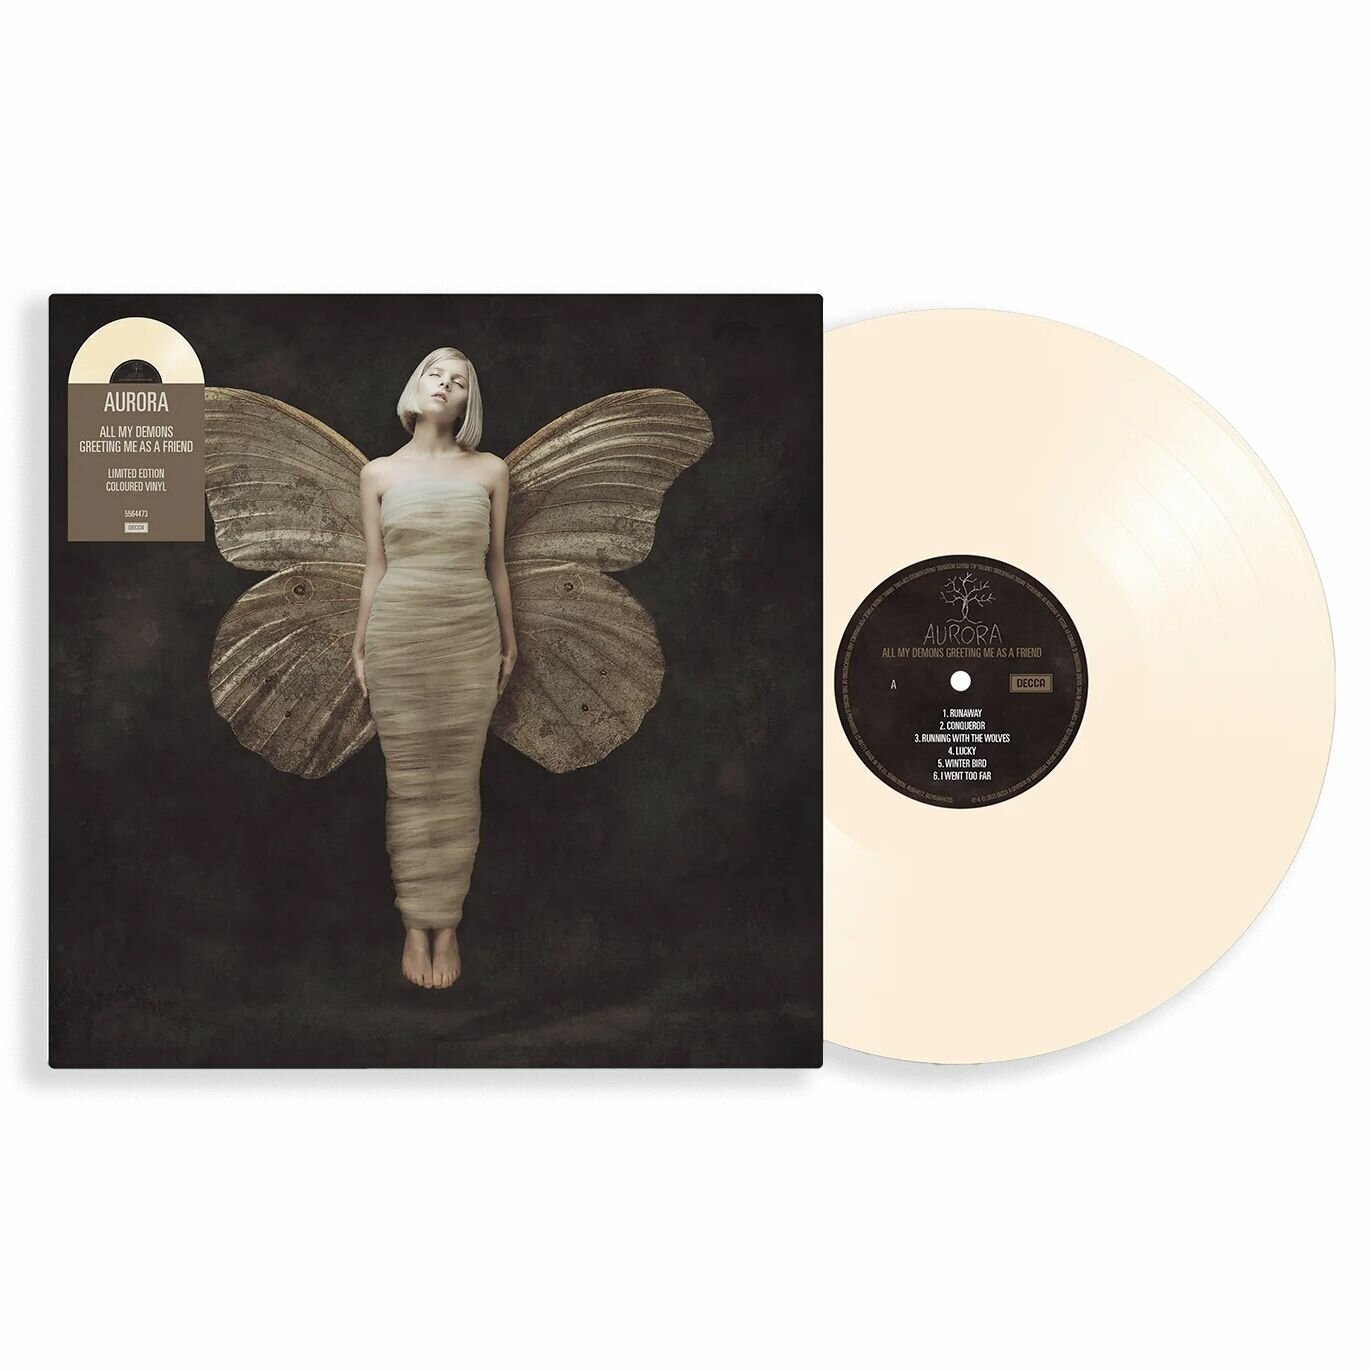 Aurora - All My Demons Greeting Me As A Friend (limited cream vinyl) новая лимитированная цветная пластинка